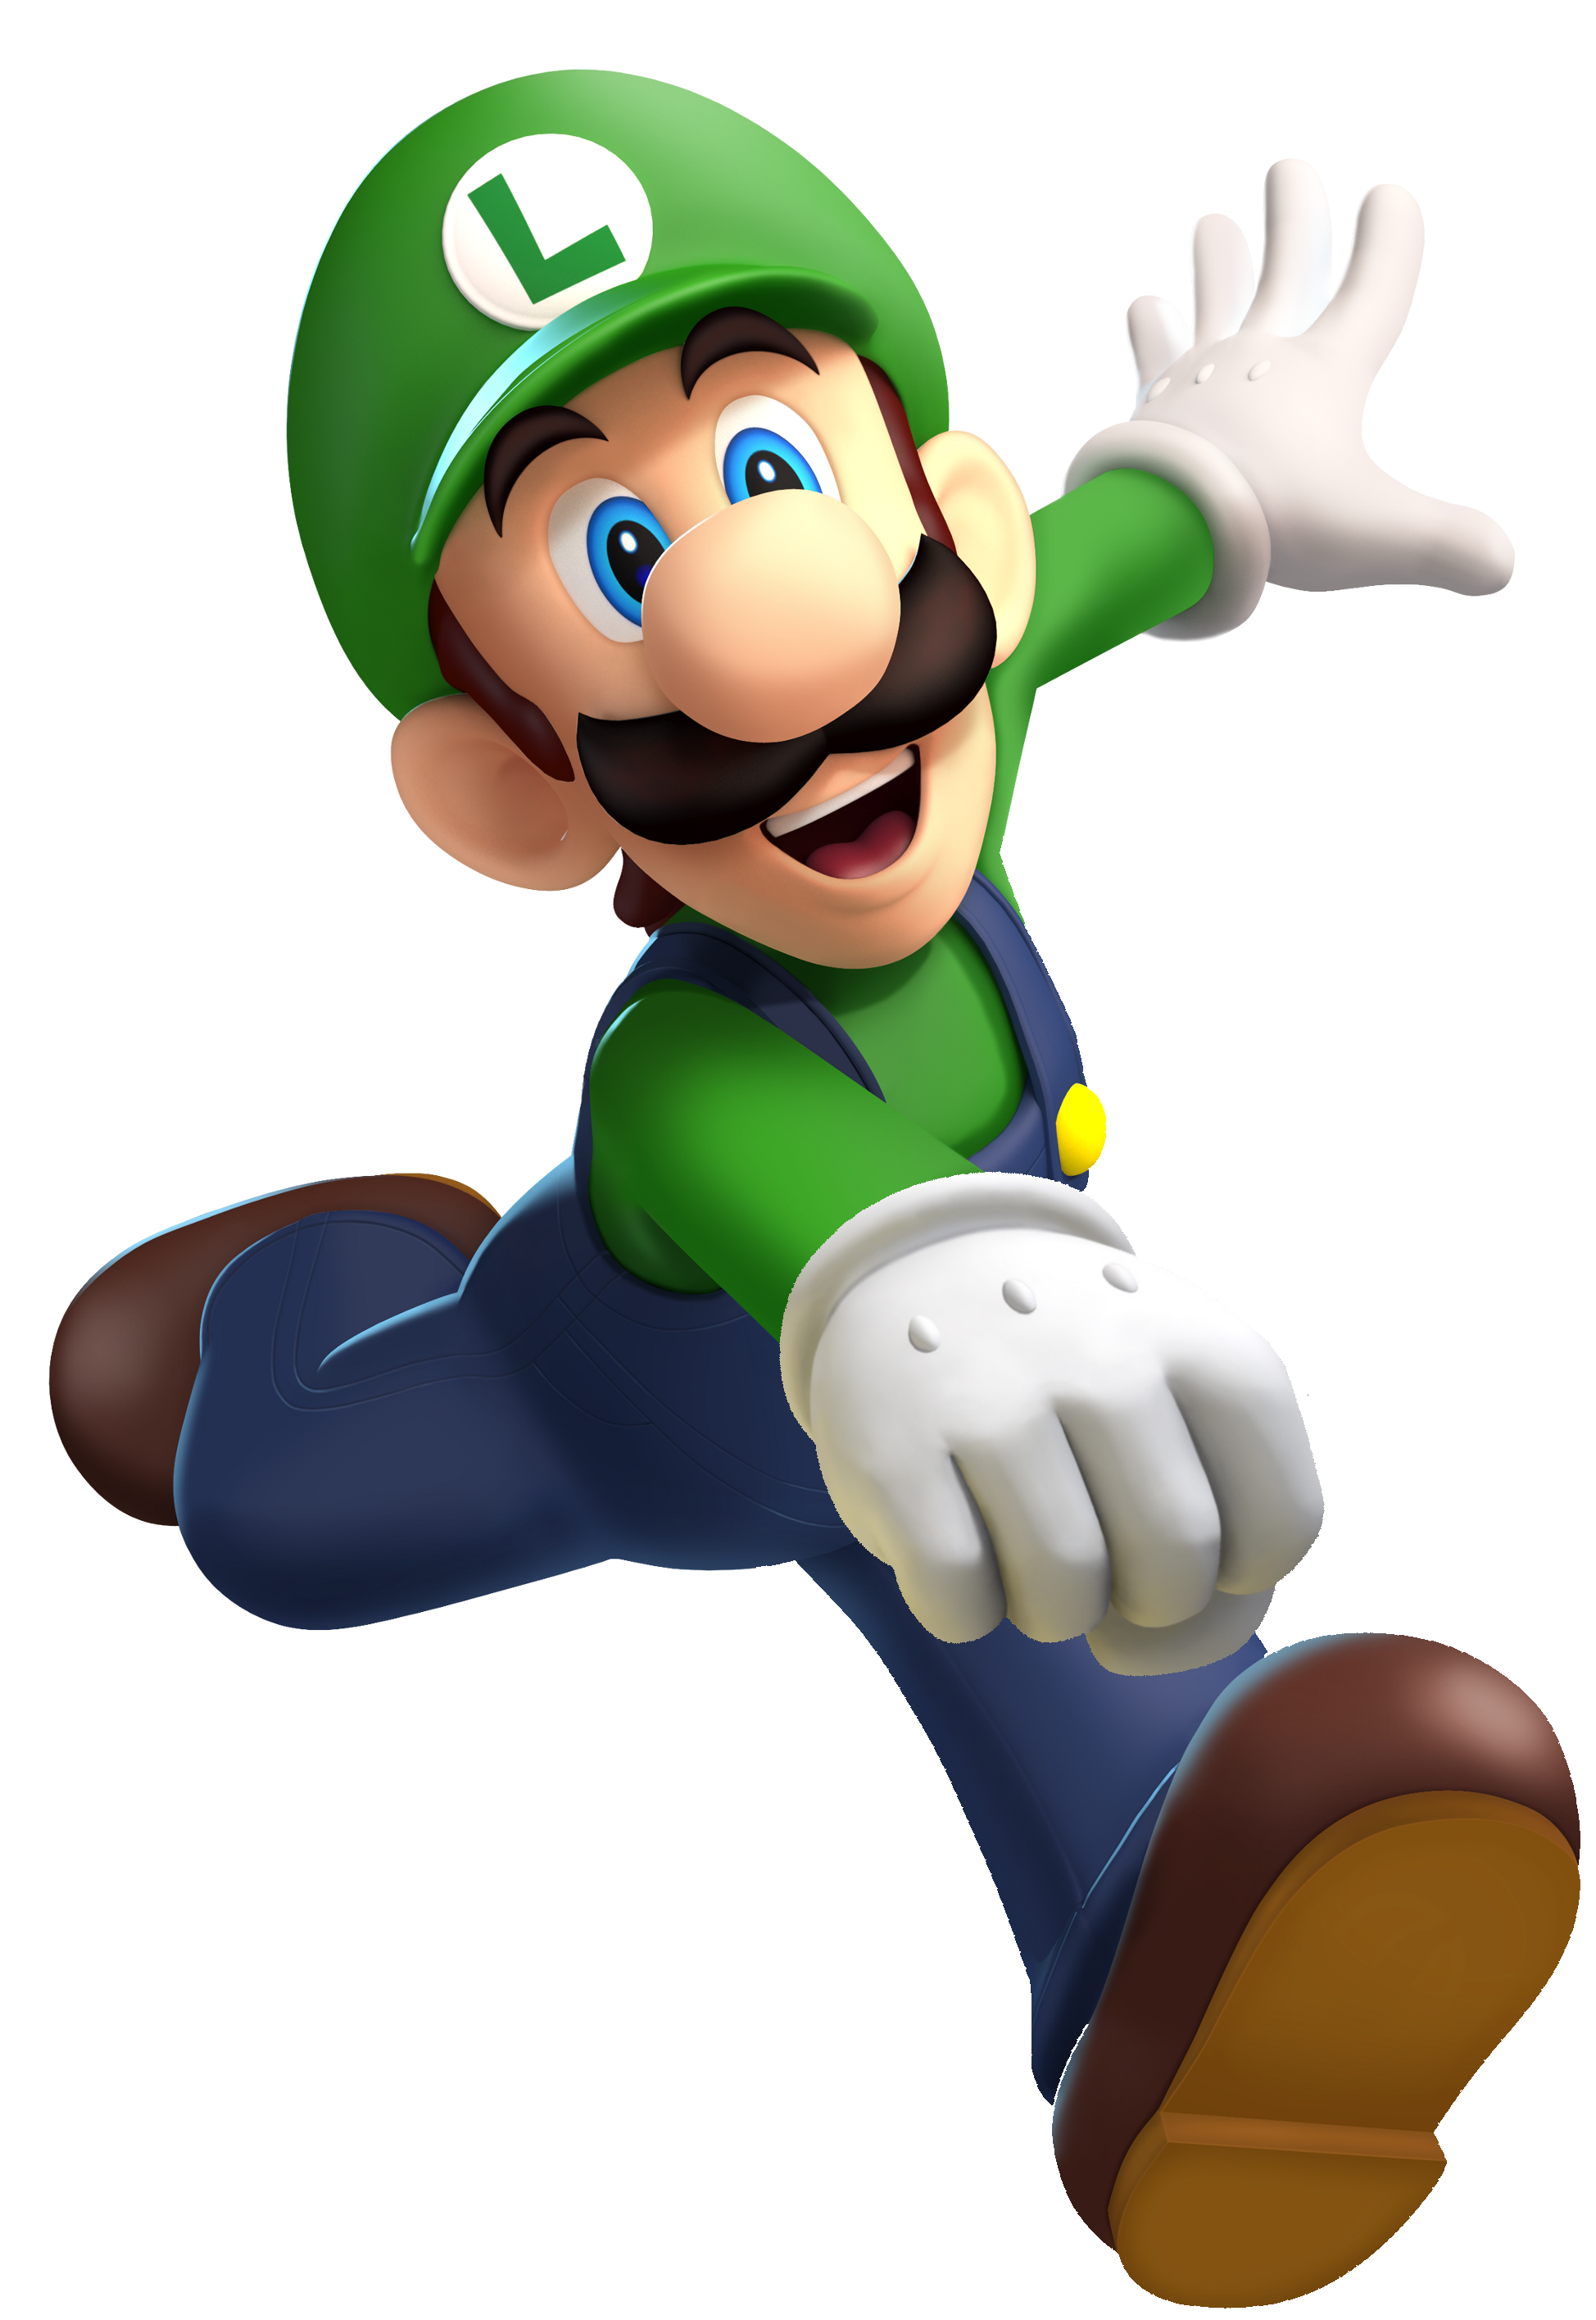 Club Nintendo – Luigi’s 72-hour sale